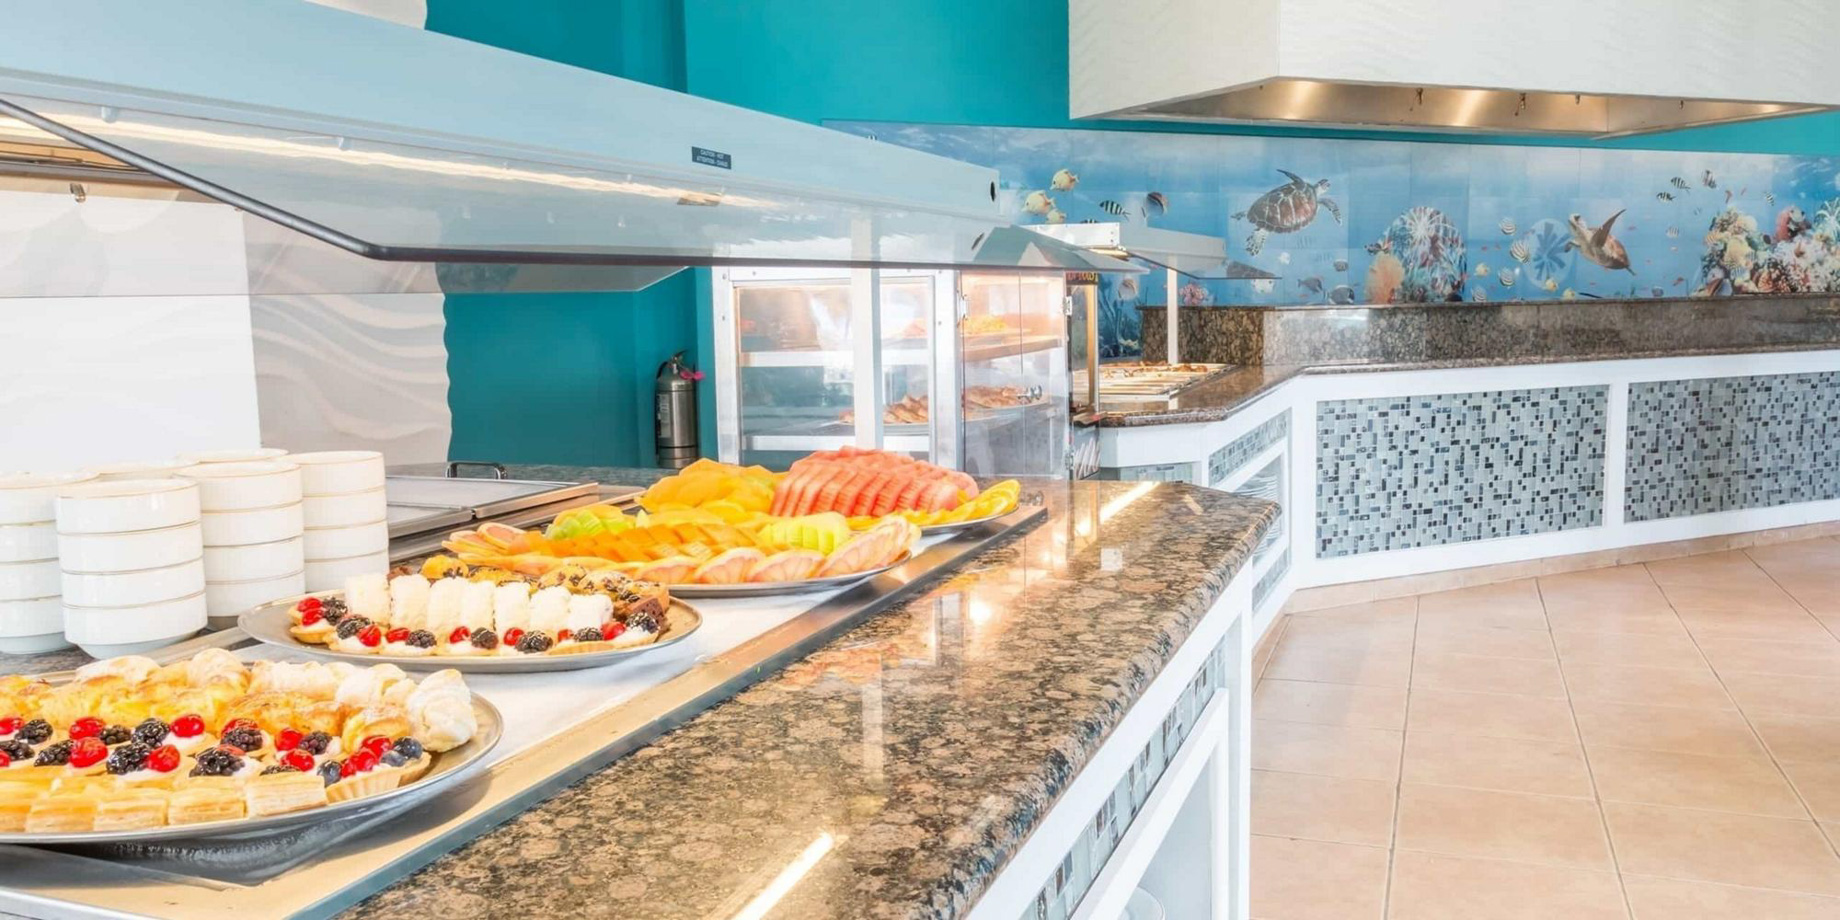 Barceló Aruba Palm Beach Resort – Noord, Aruba – Arubian Seafood Restaurant